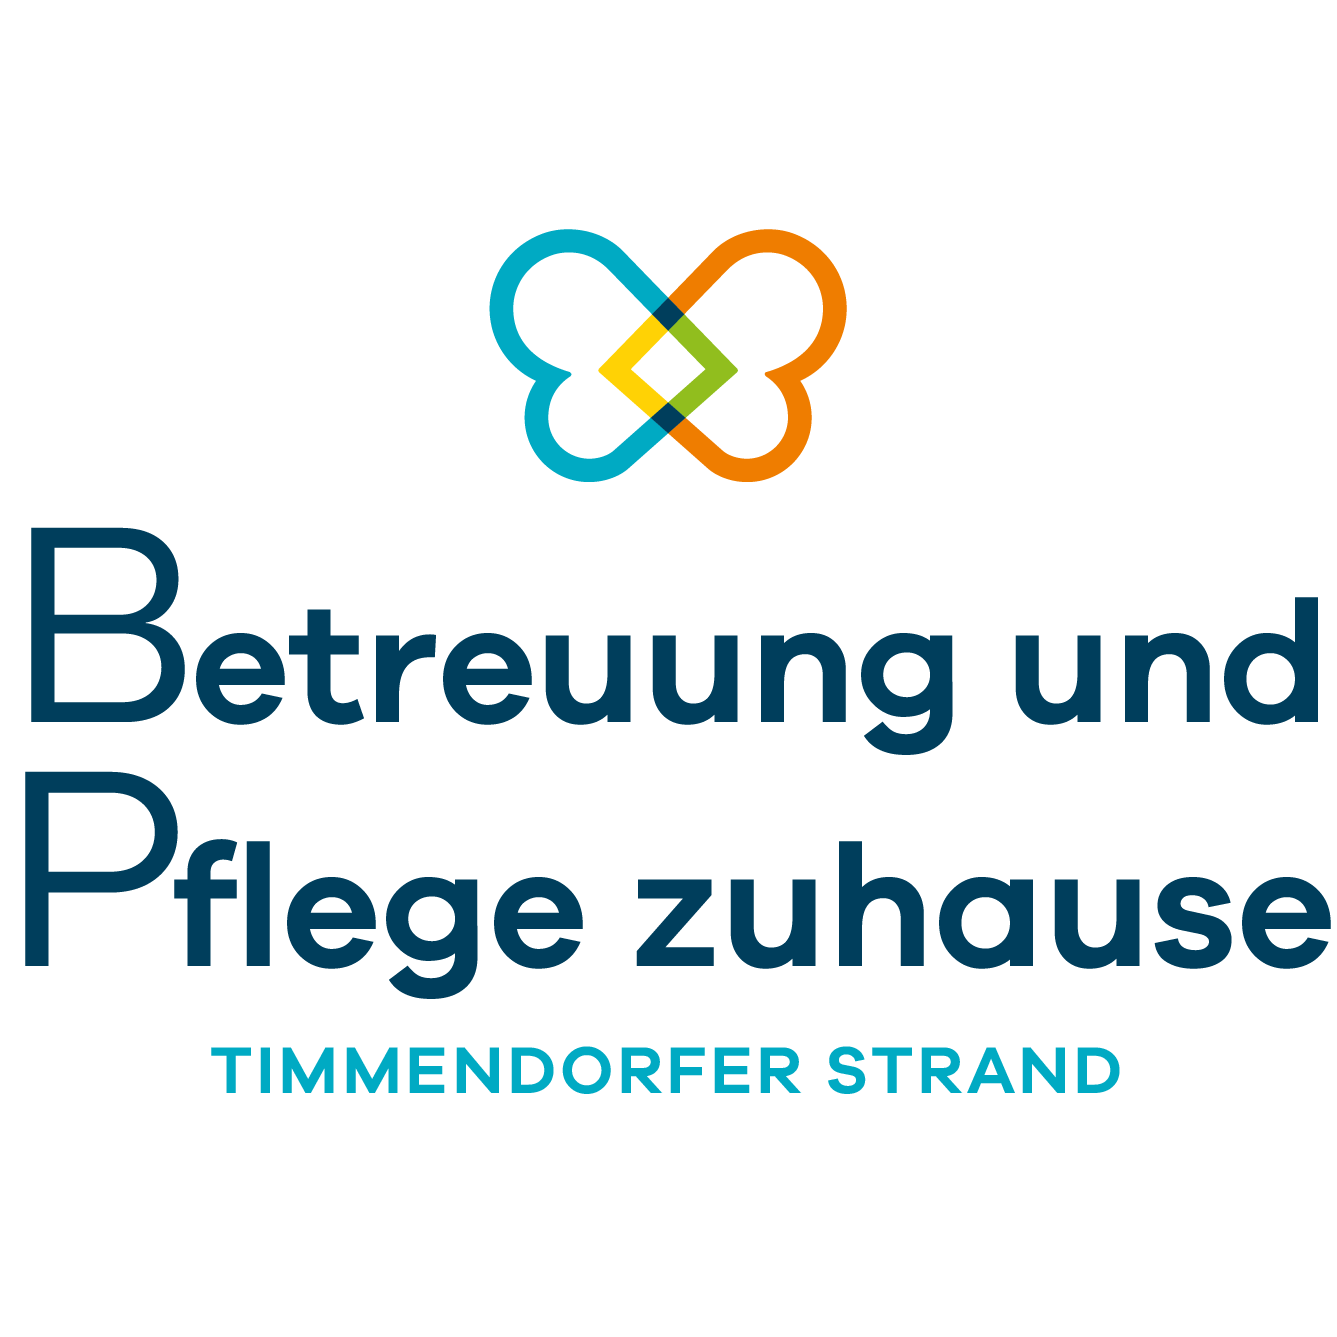 Logo Seniorenresidenz Timmendorfer Strand